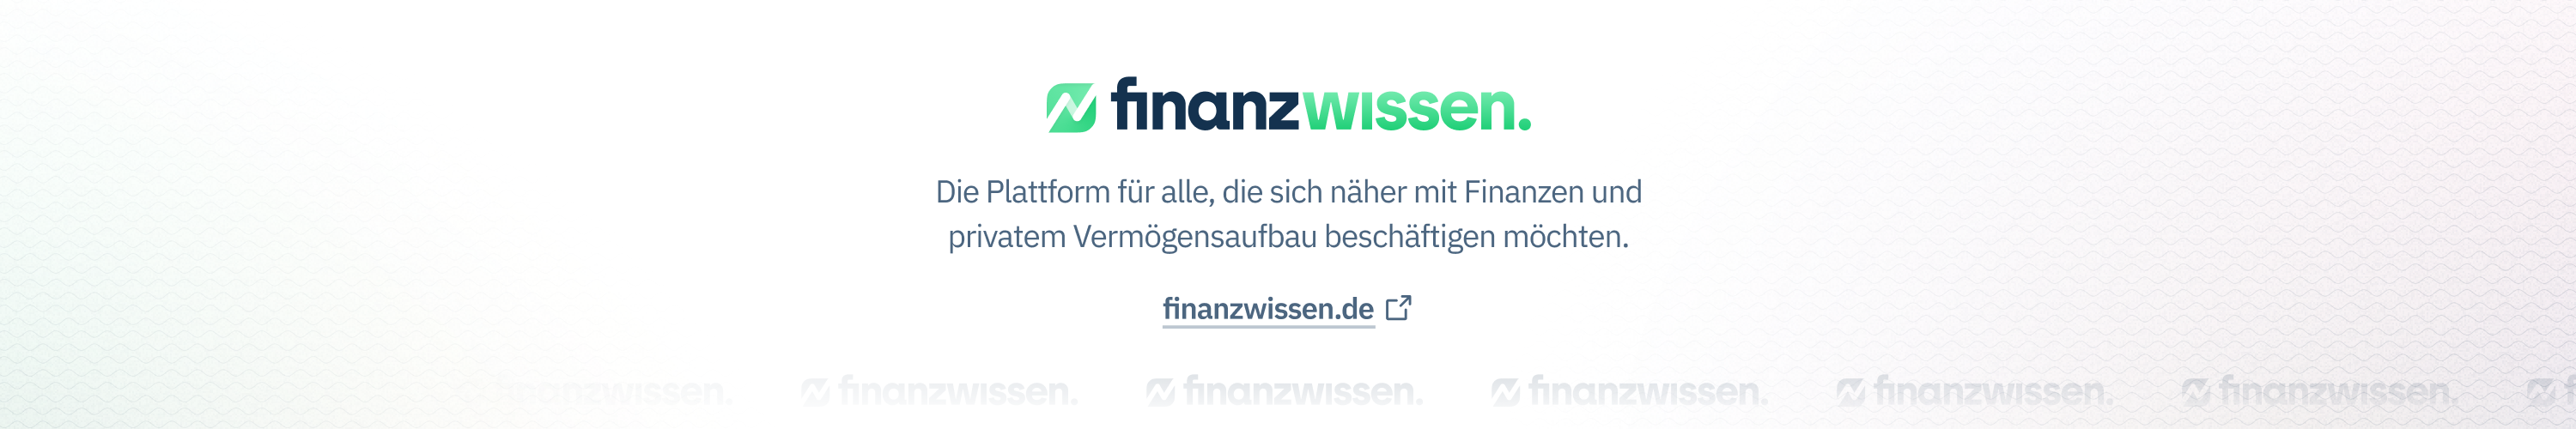 Finanzwissen.de